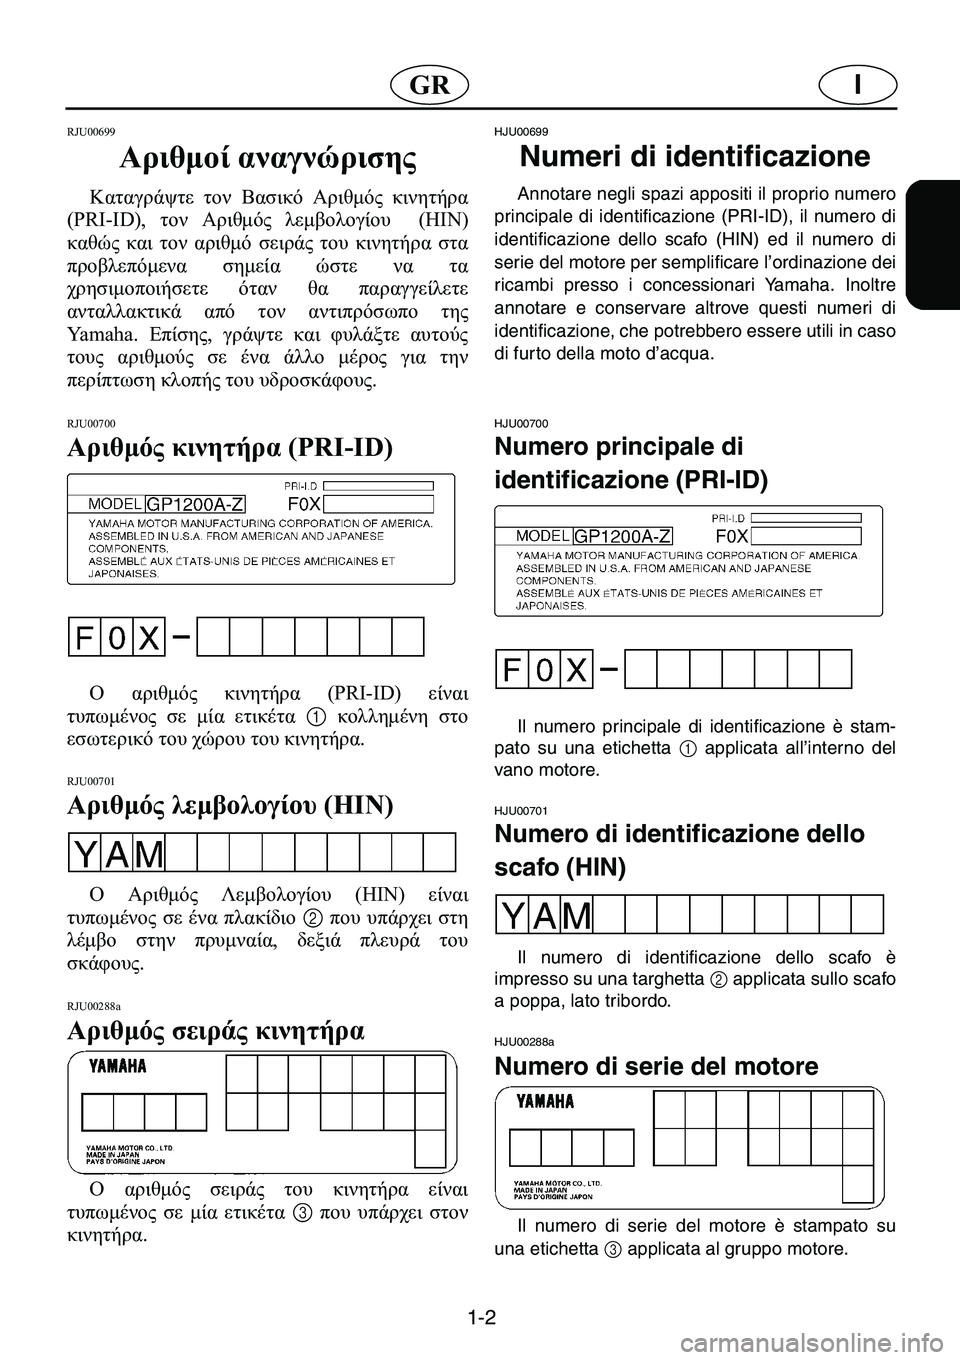 YAMAHA GP1200 2001  Manuale duso (in Italian) 1-2
I�*�5
�5�-�8������
ù! �..+!1"��
�.2.!%20� 2 � 